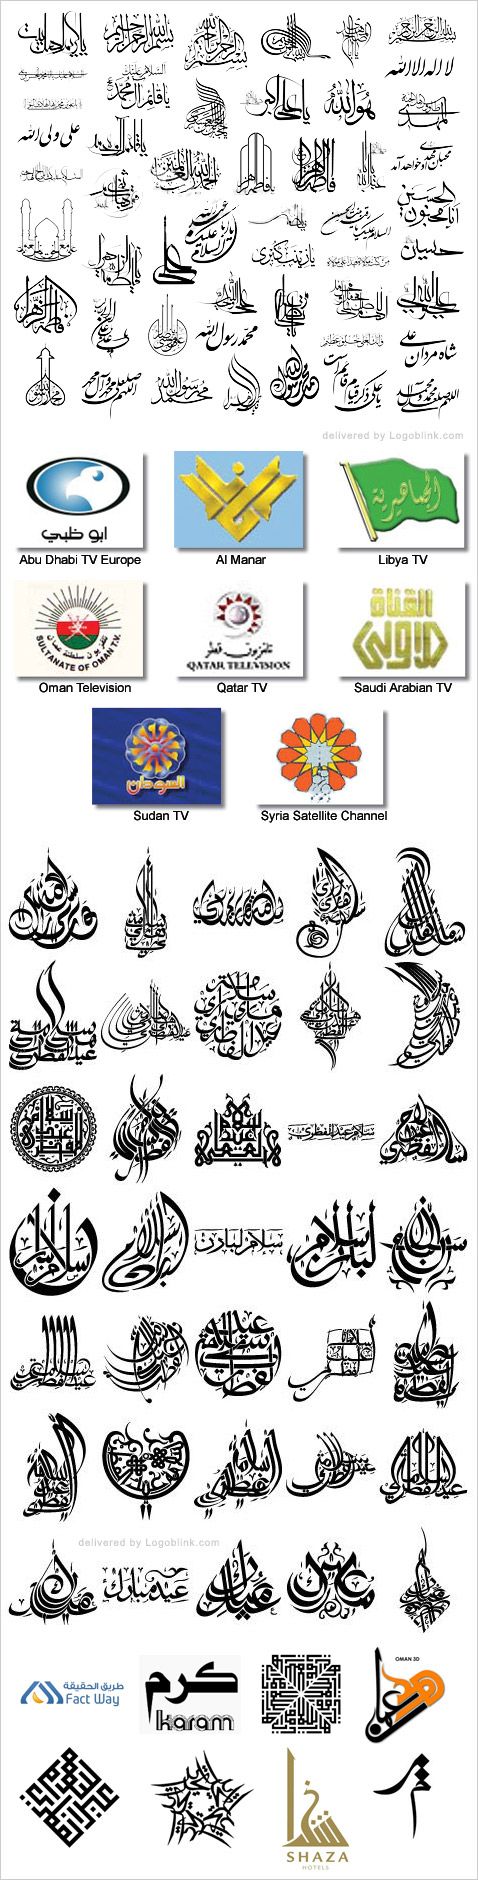 Arabic calligraphy logo set